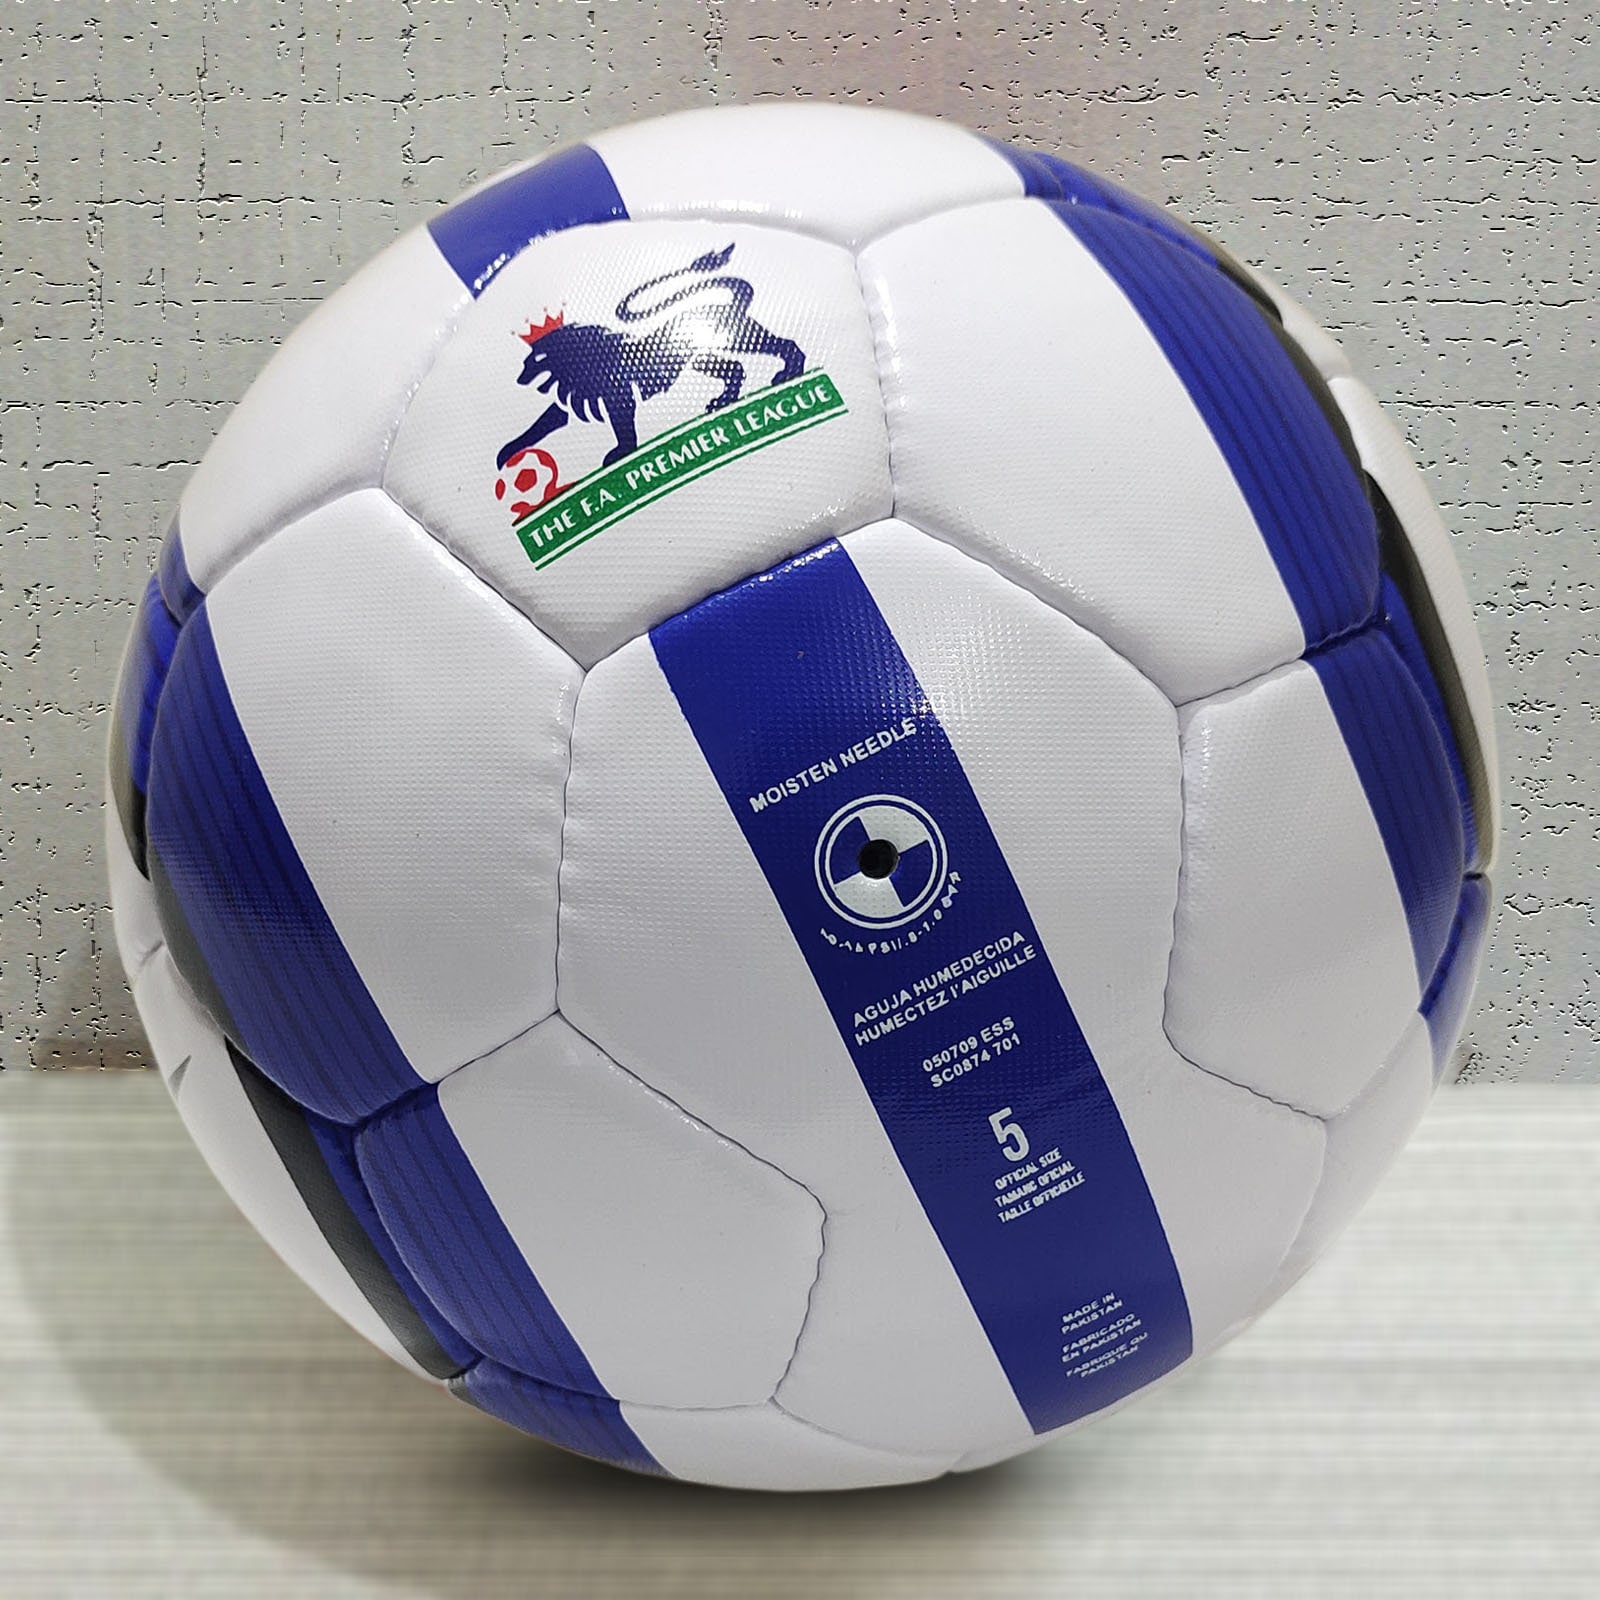 T90 Aerow Super Rare P/league Soccer Ball OMB - Etsy